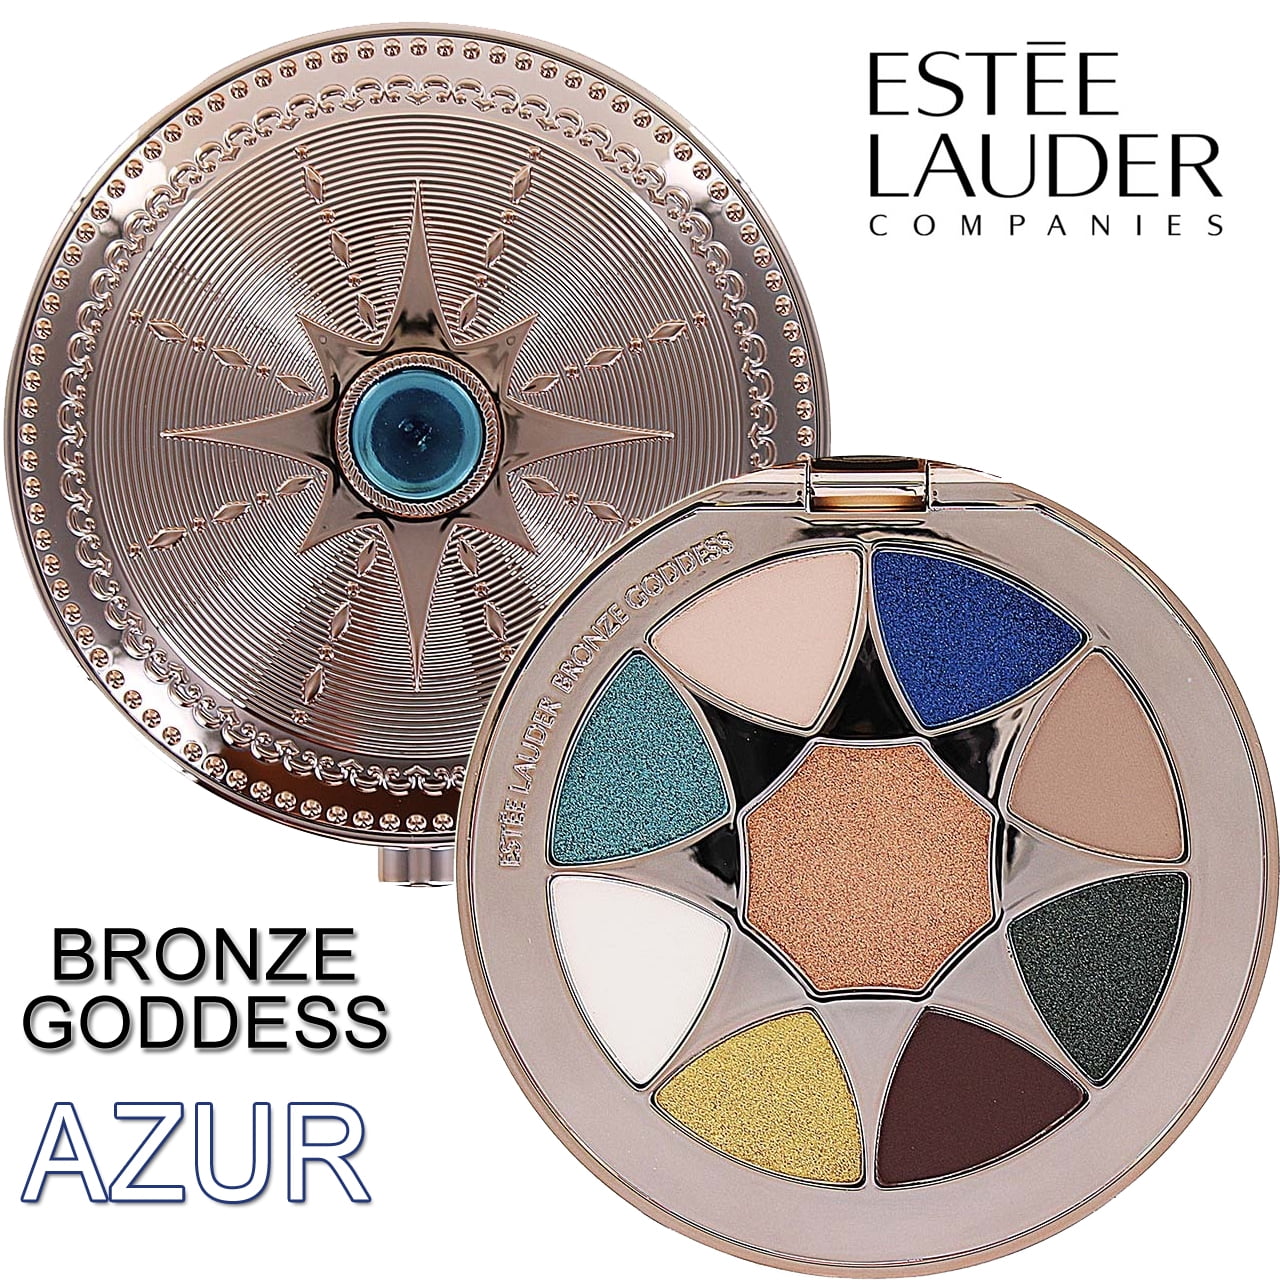 pendul kanal kaskade Estee Lauder Bronze Goddess Azur 0.23oz/6.8g Summer Look Eyeshadow Palette  9 Shades - Walmart.com